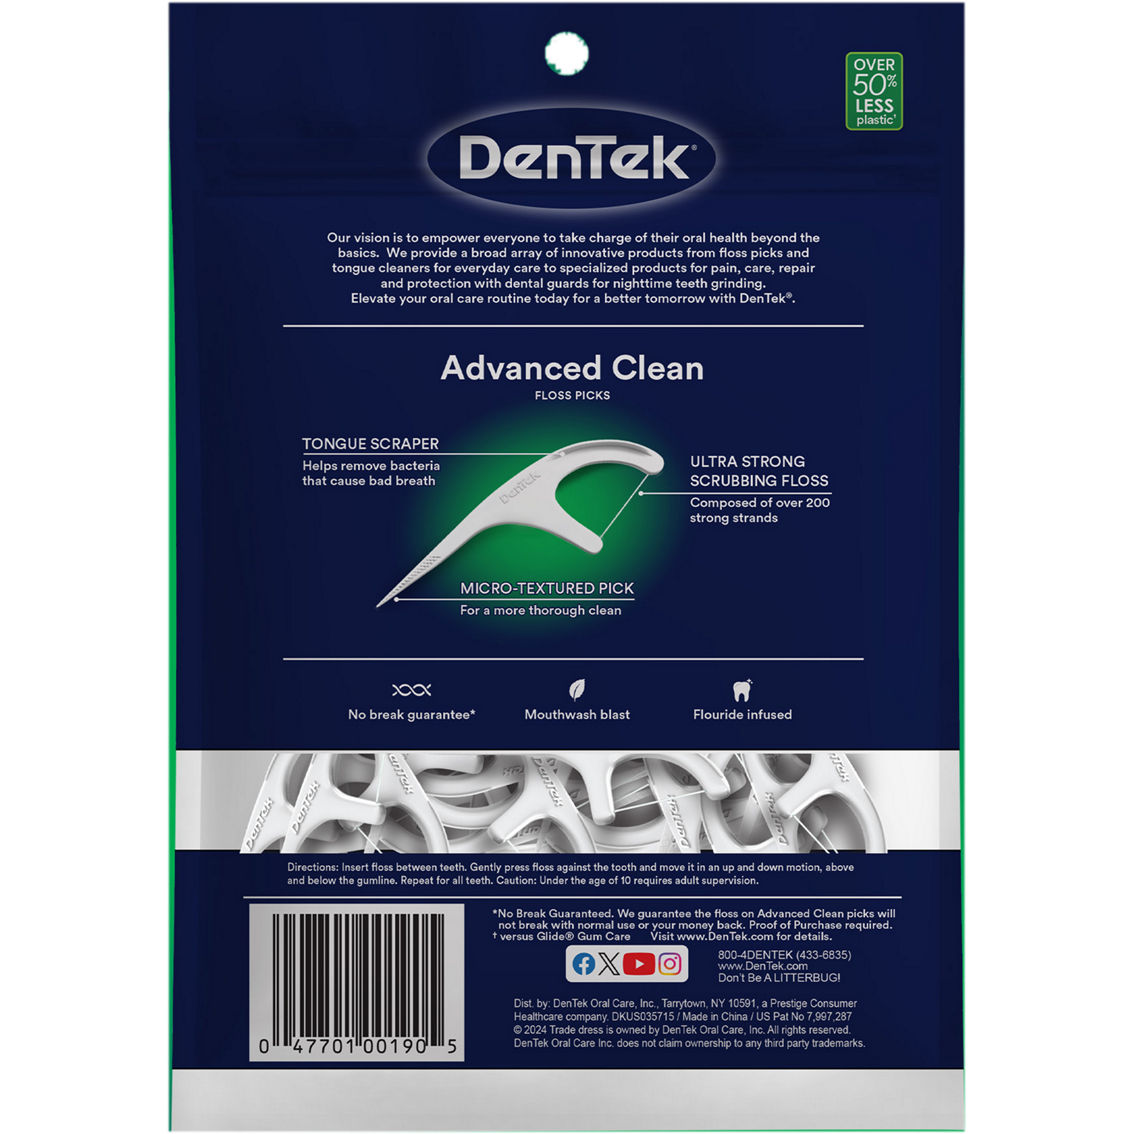 DenTek Triple Clean Floss Picks 150 ct. - Image 2 of 2